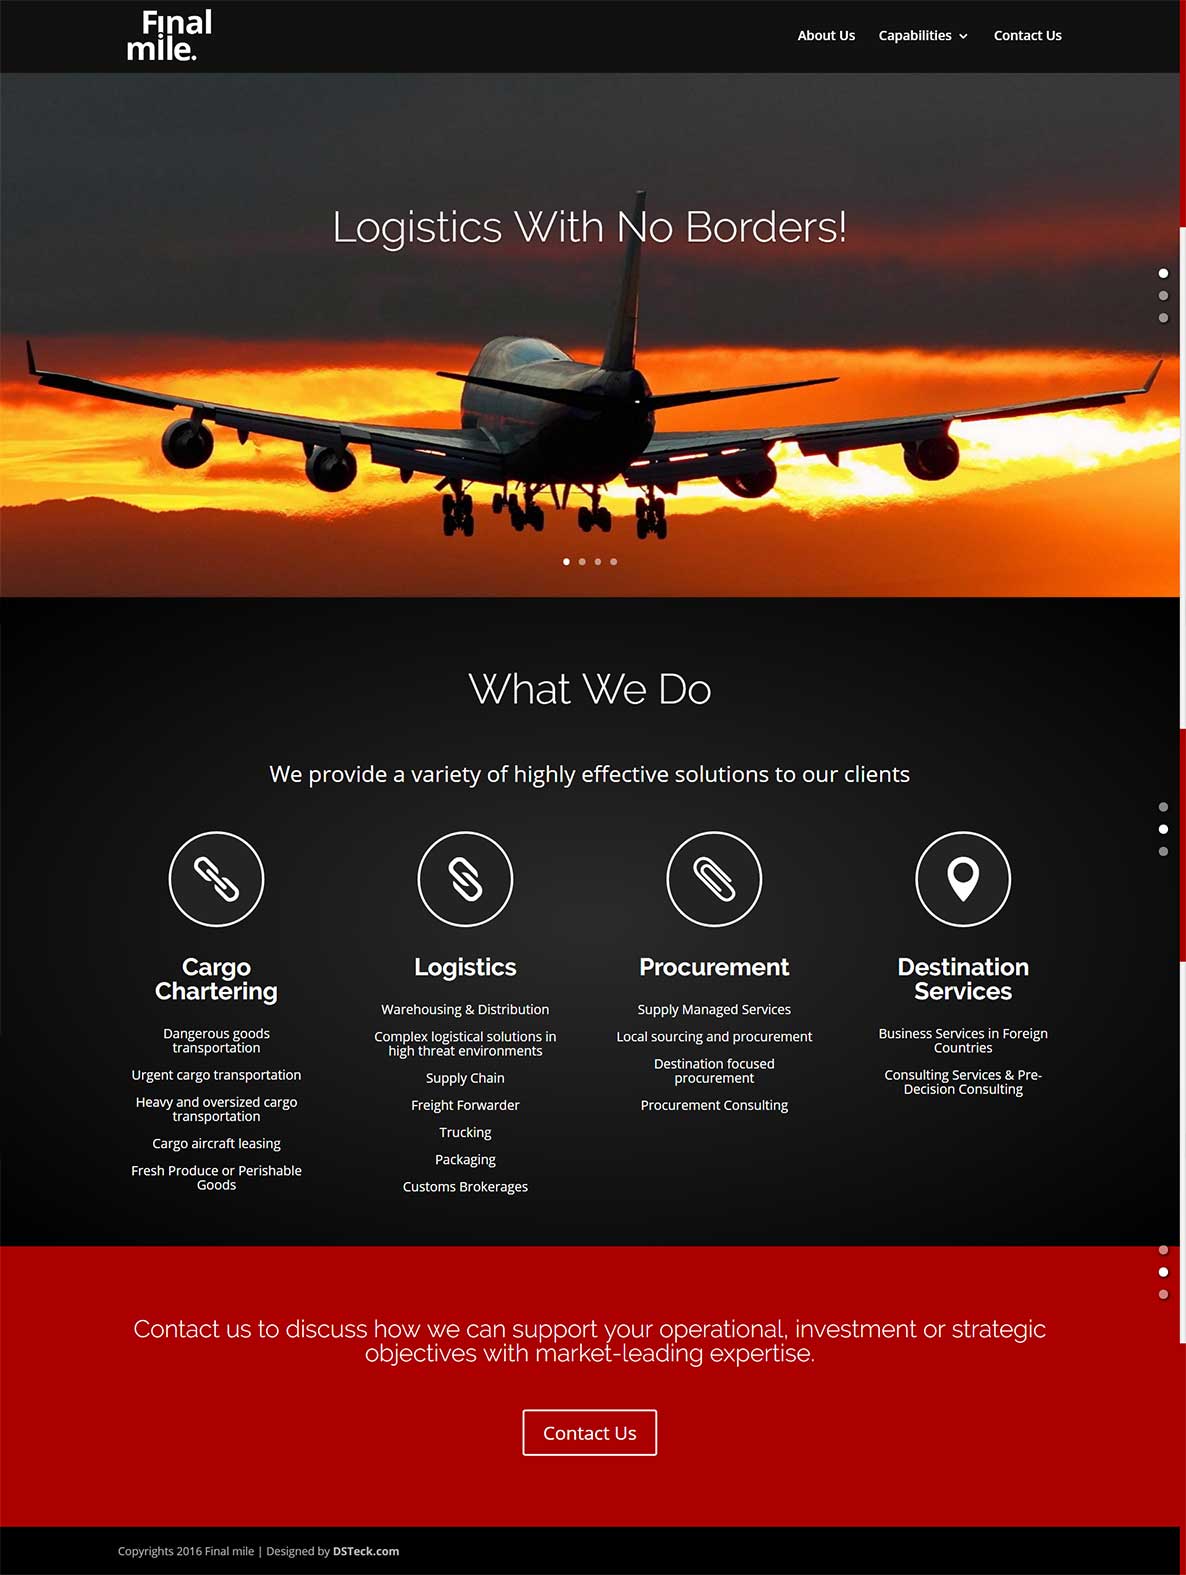 Final Mile Logistics Website